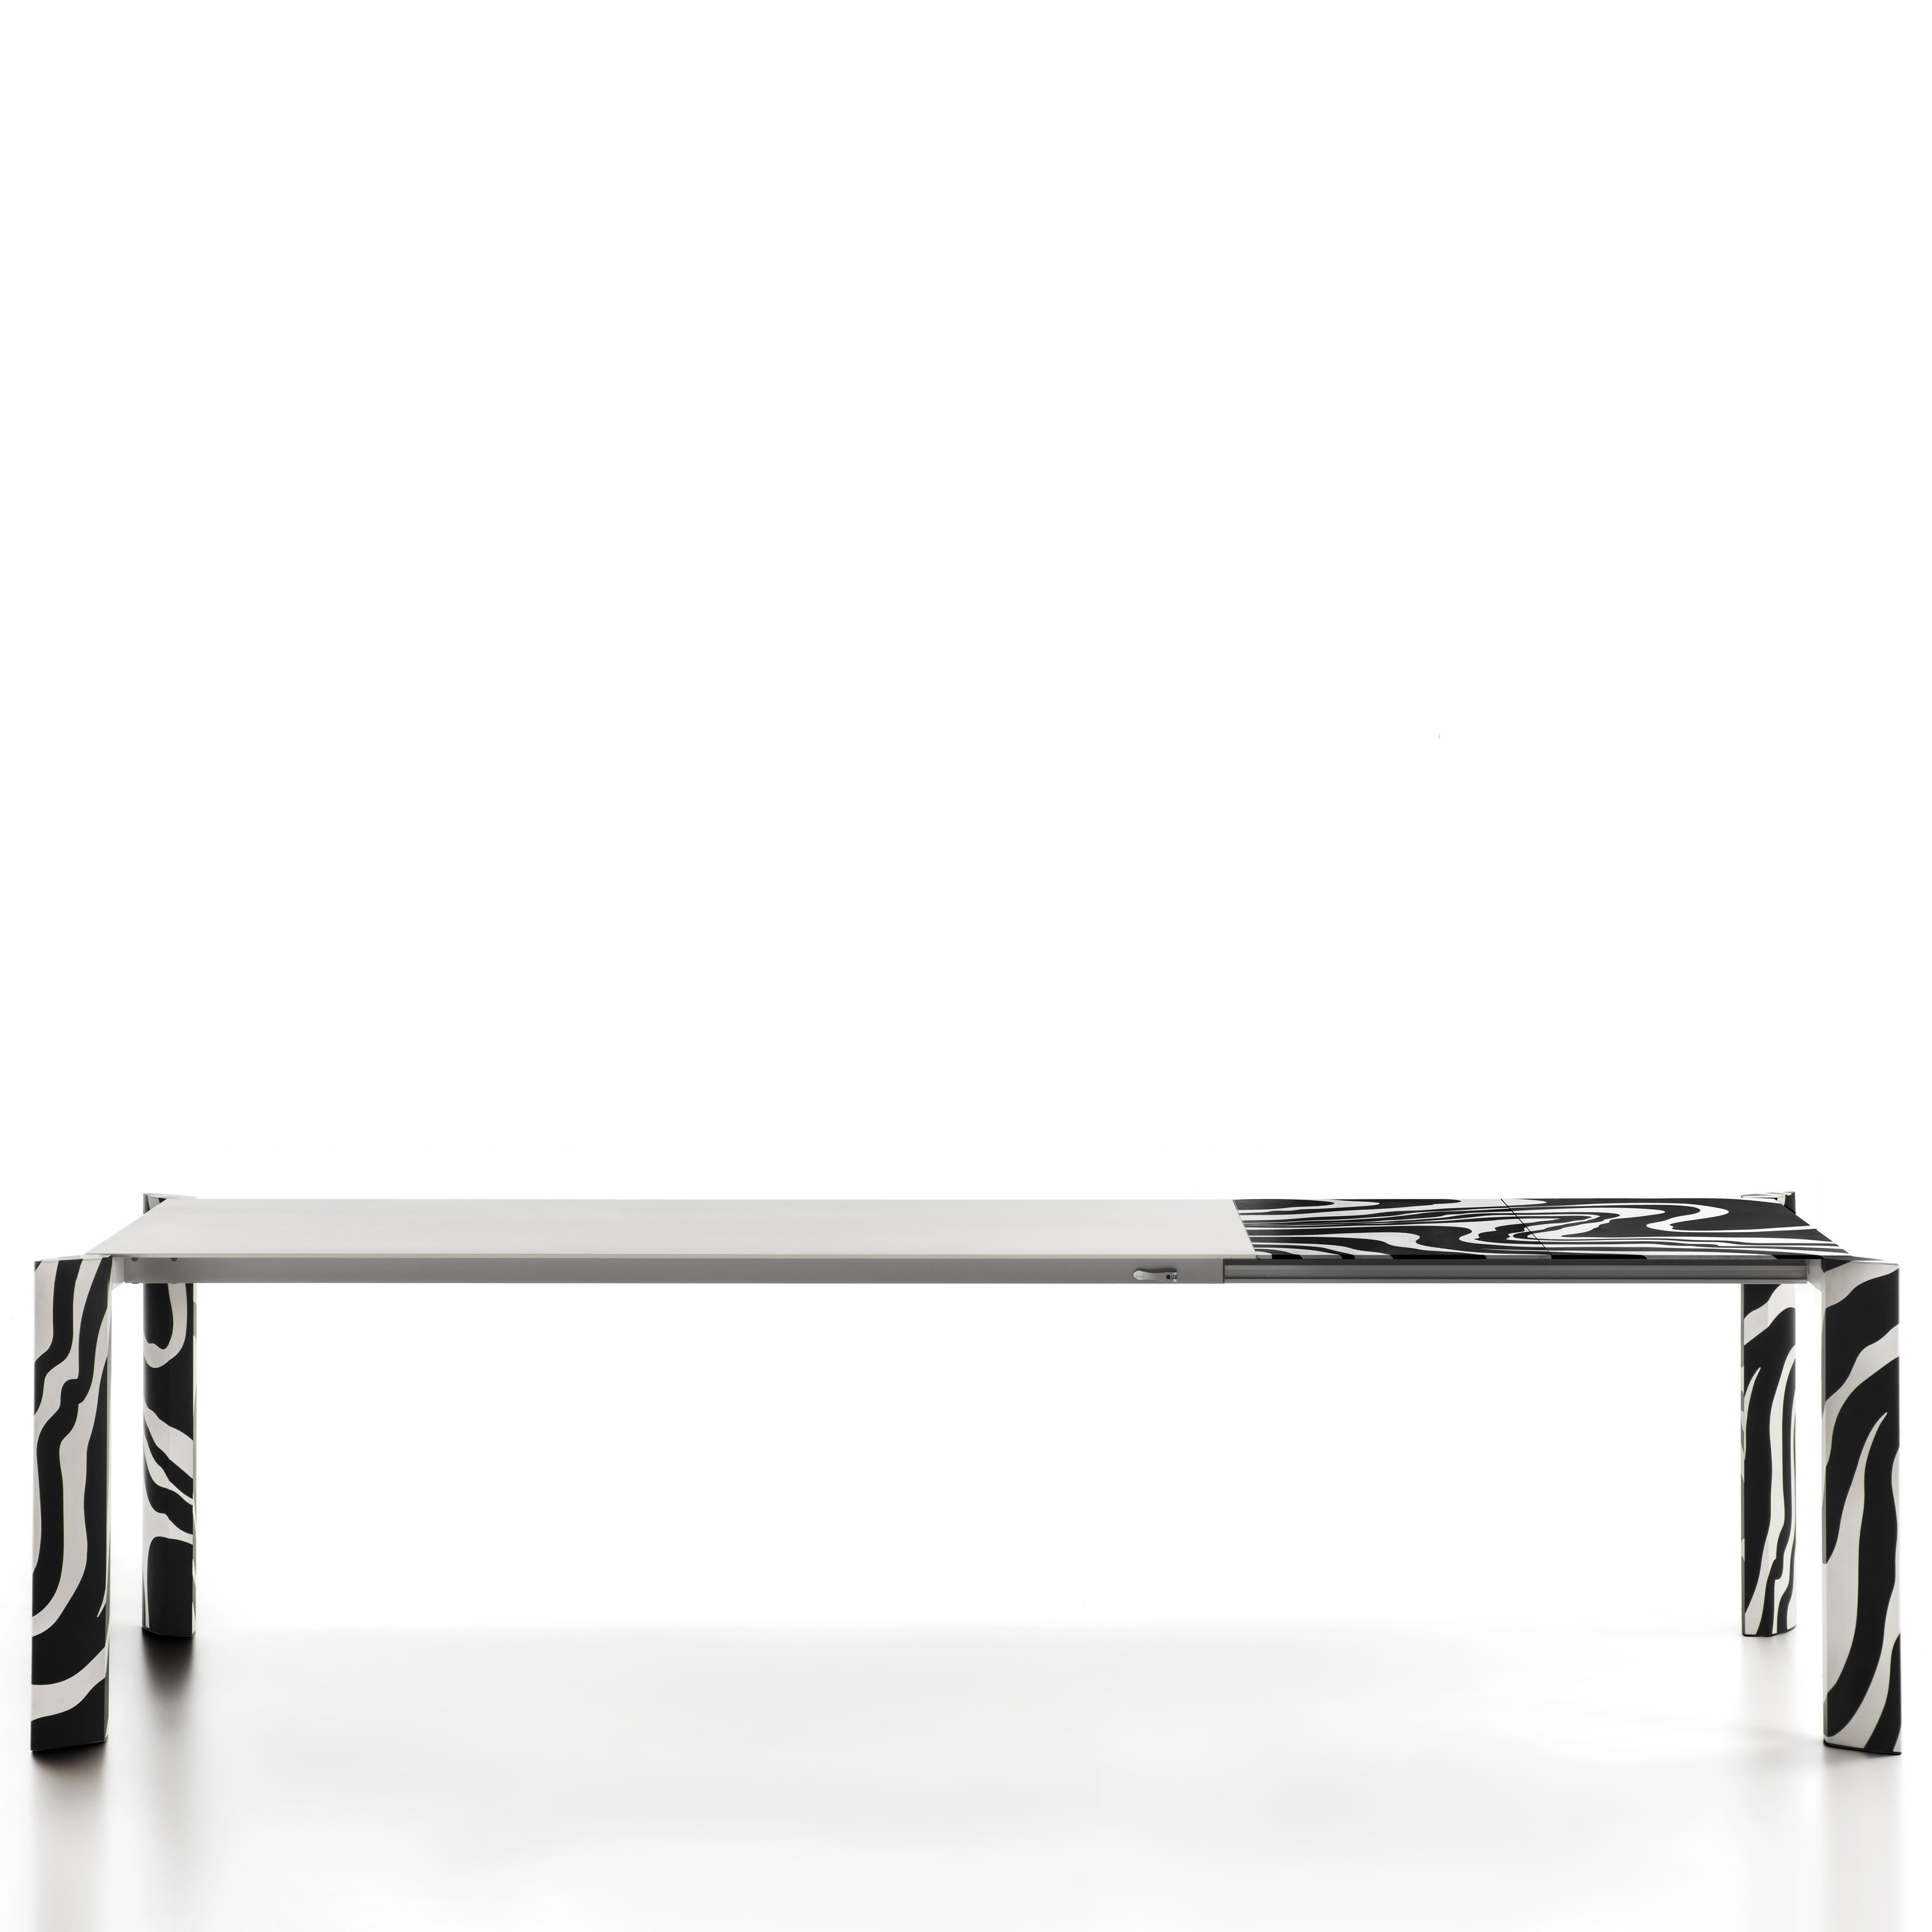 Metalwork Minimalist LAAB Metaverso Table Aluminium Extendable Long Black White For Sale